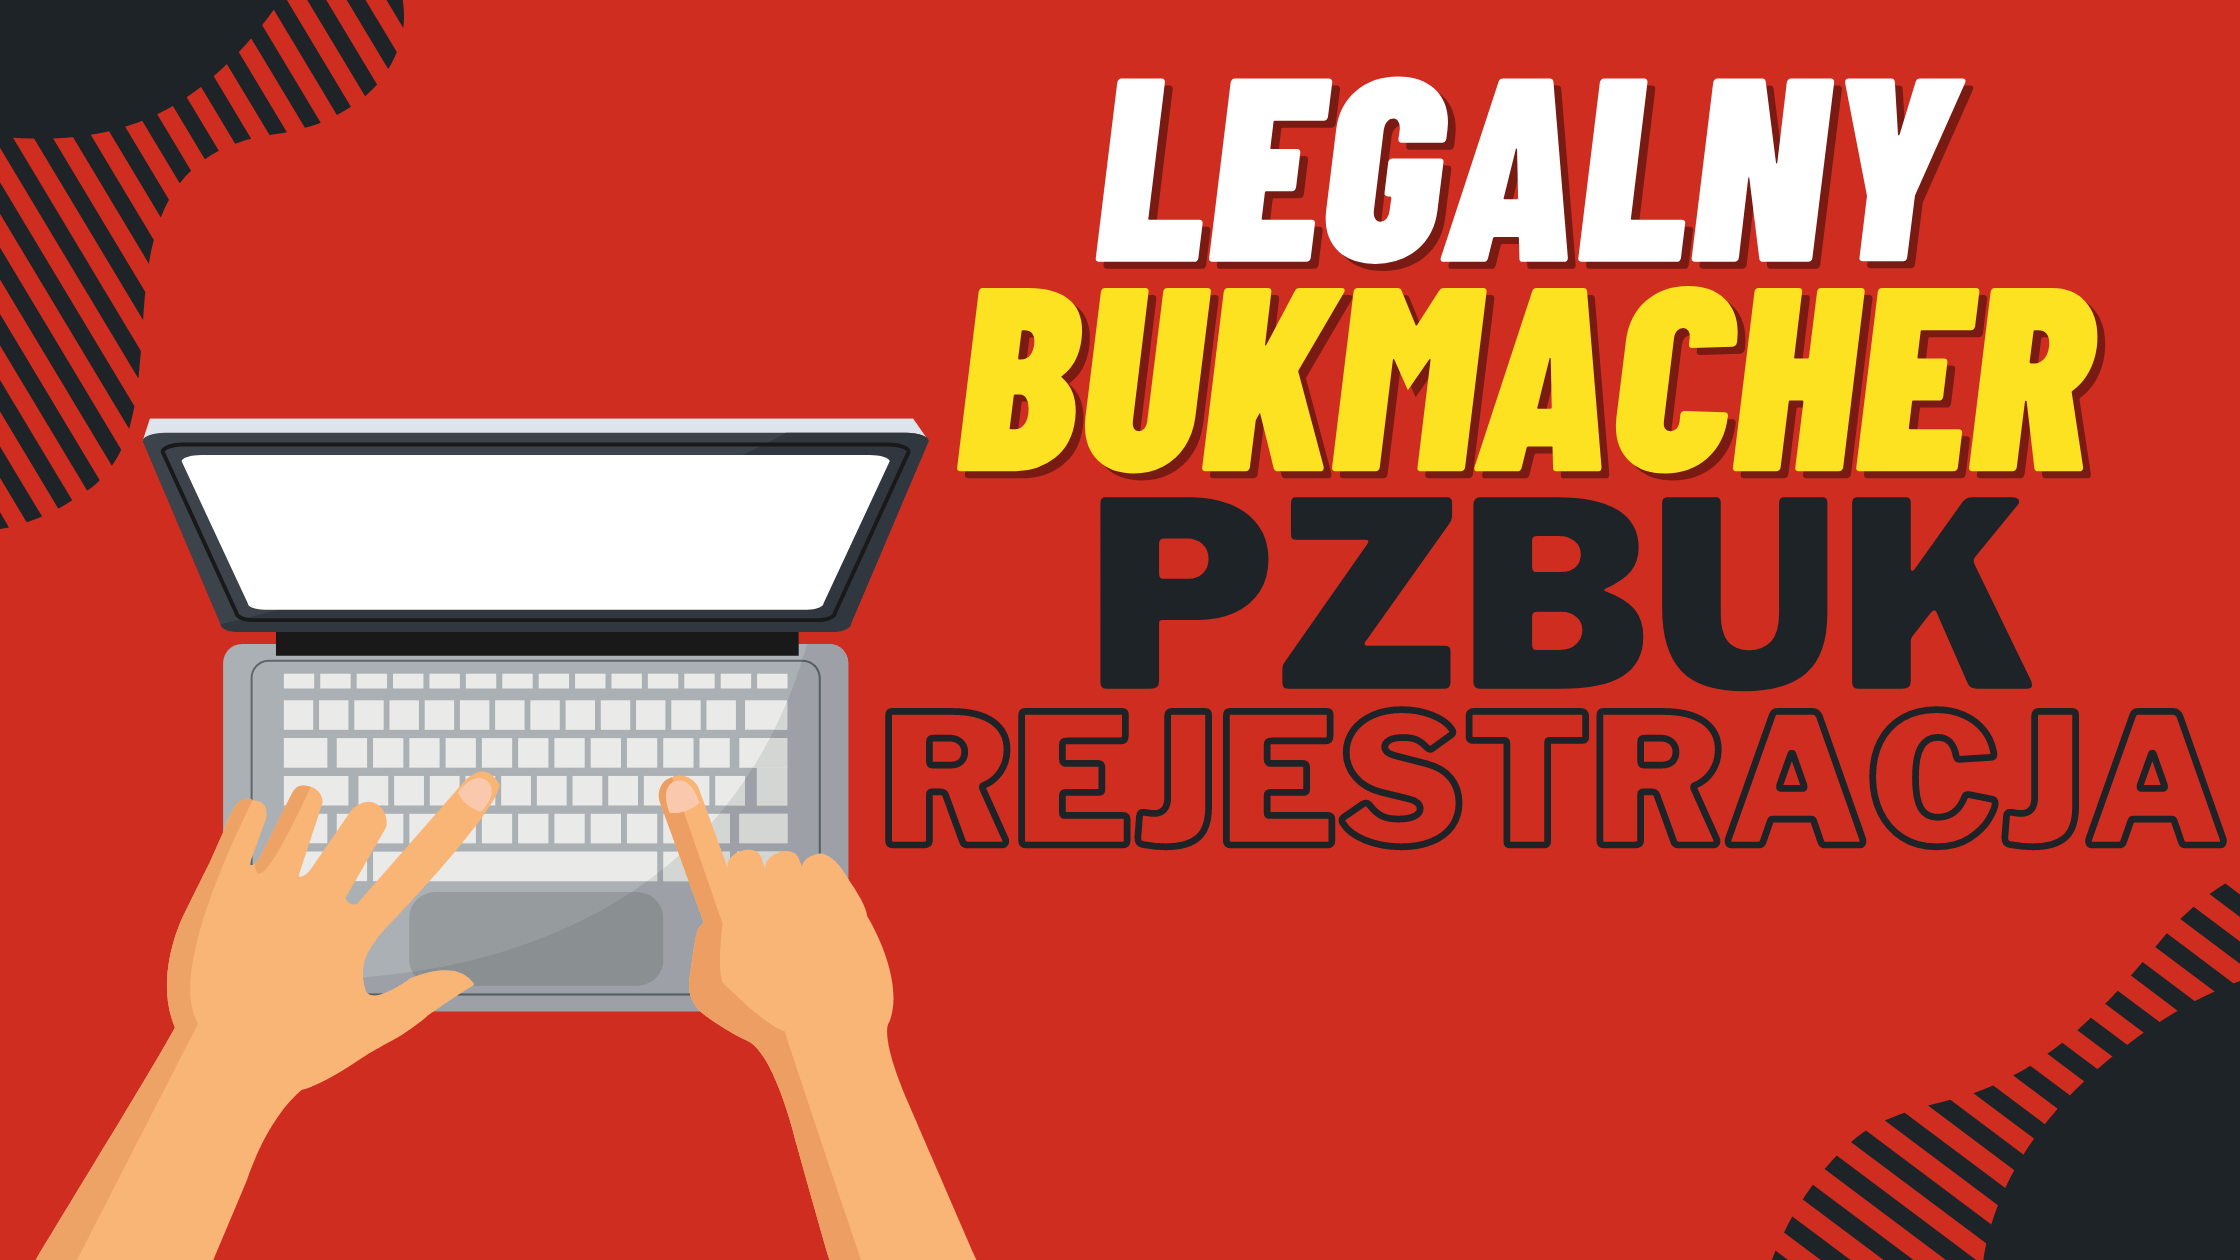 Legalny polski bukmacher PZBuk rejestracja